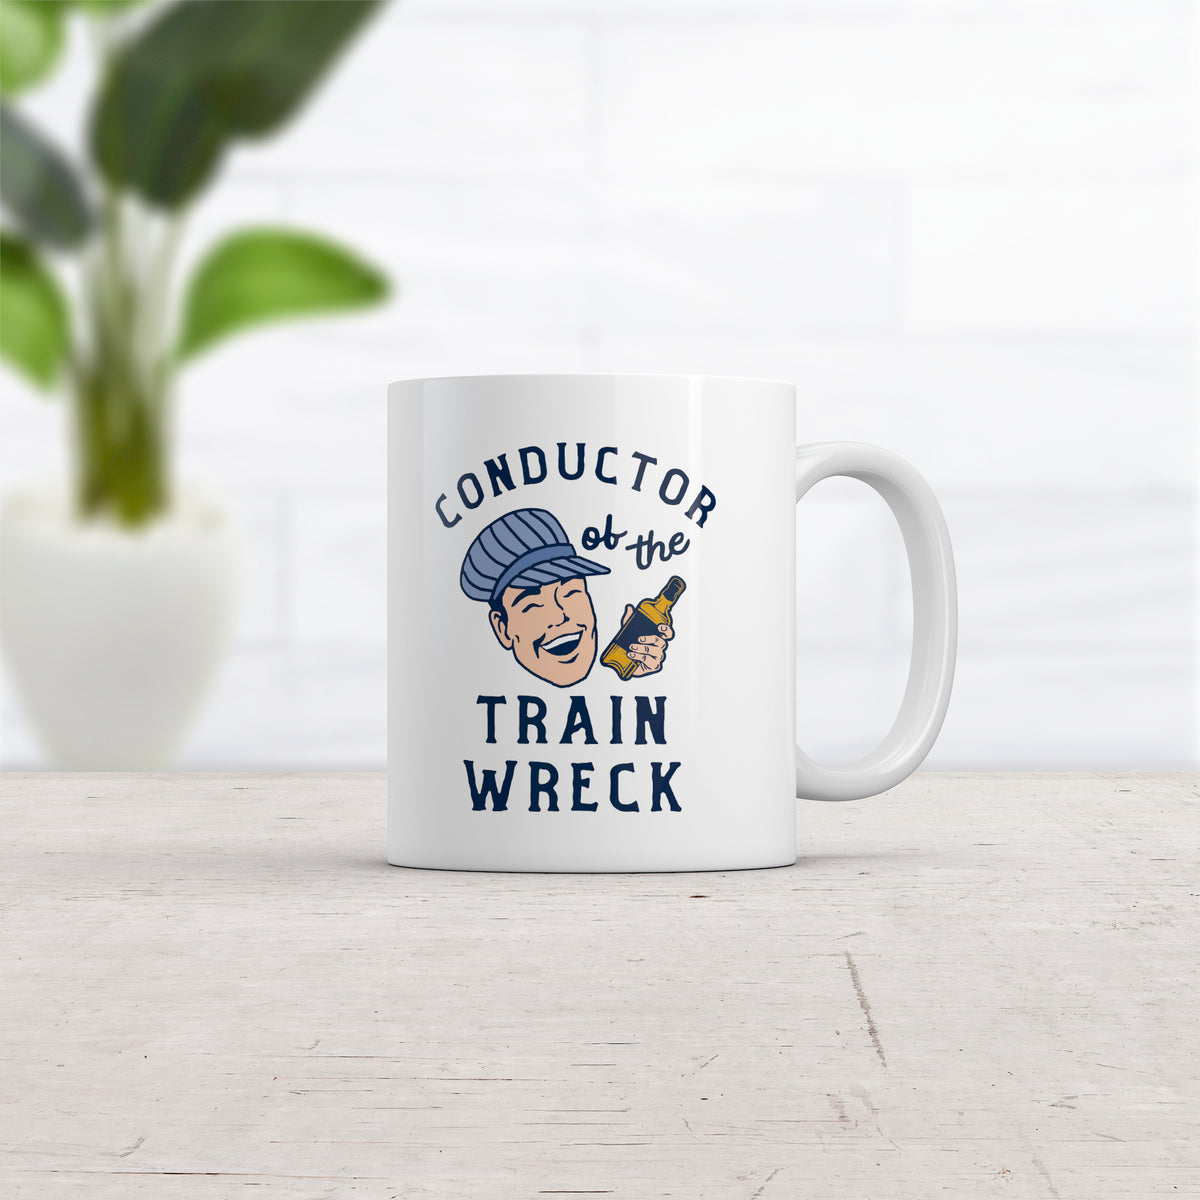 Conductor Of The Train Wreck Mug